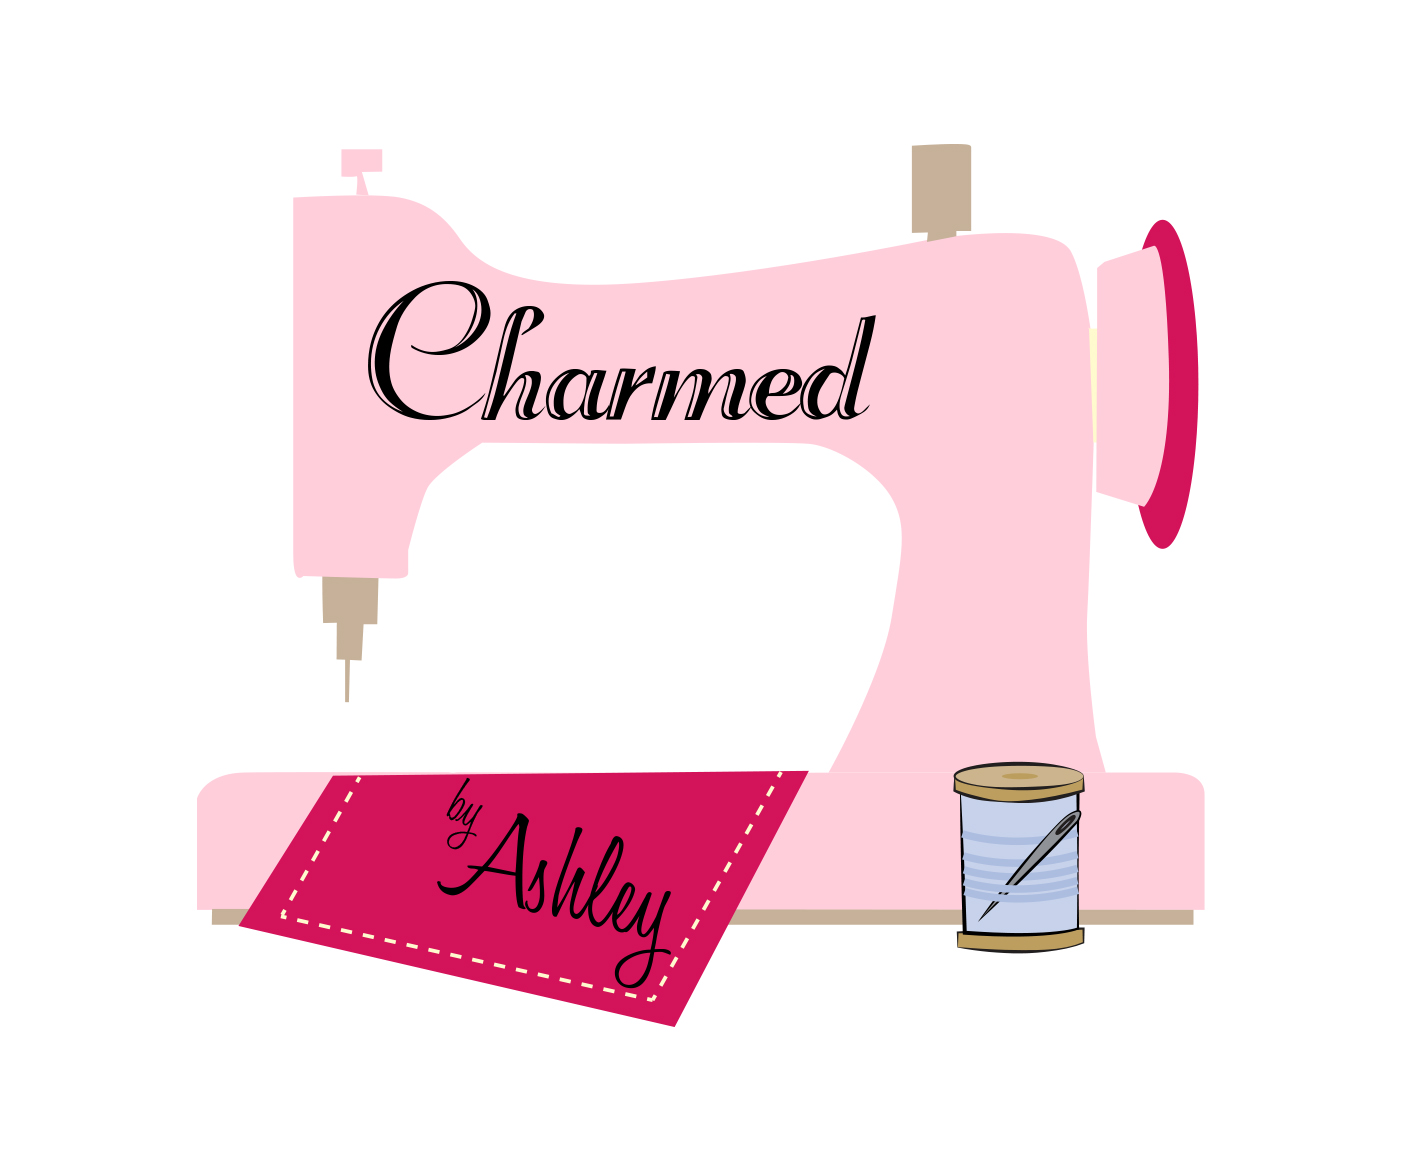 Charmed By Ashley